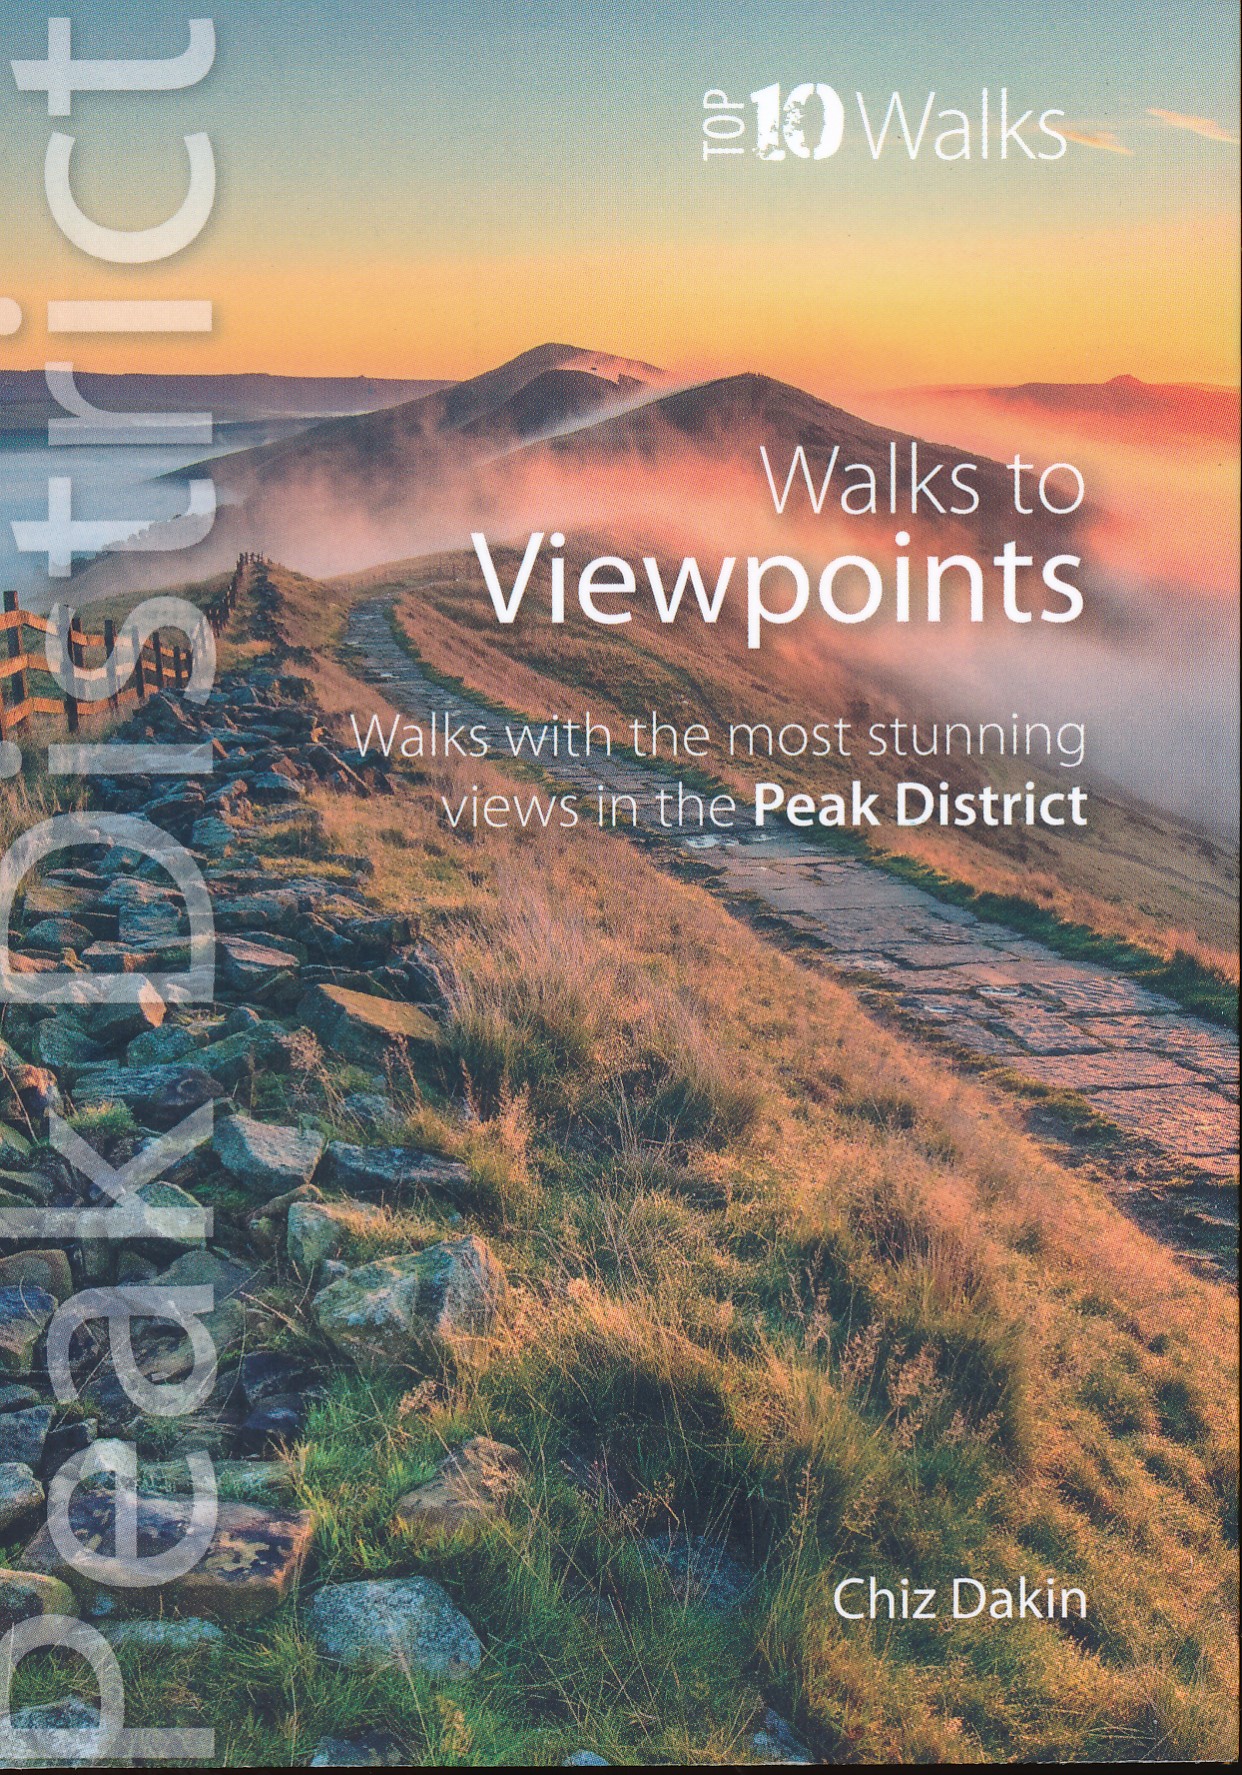 Online bestellen: Wandelgids Peak District: Walks to Viewpoints | Northern Eye Books